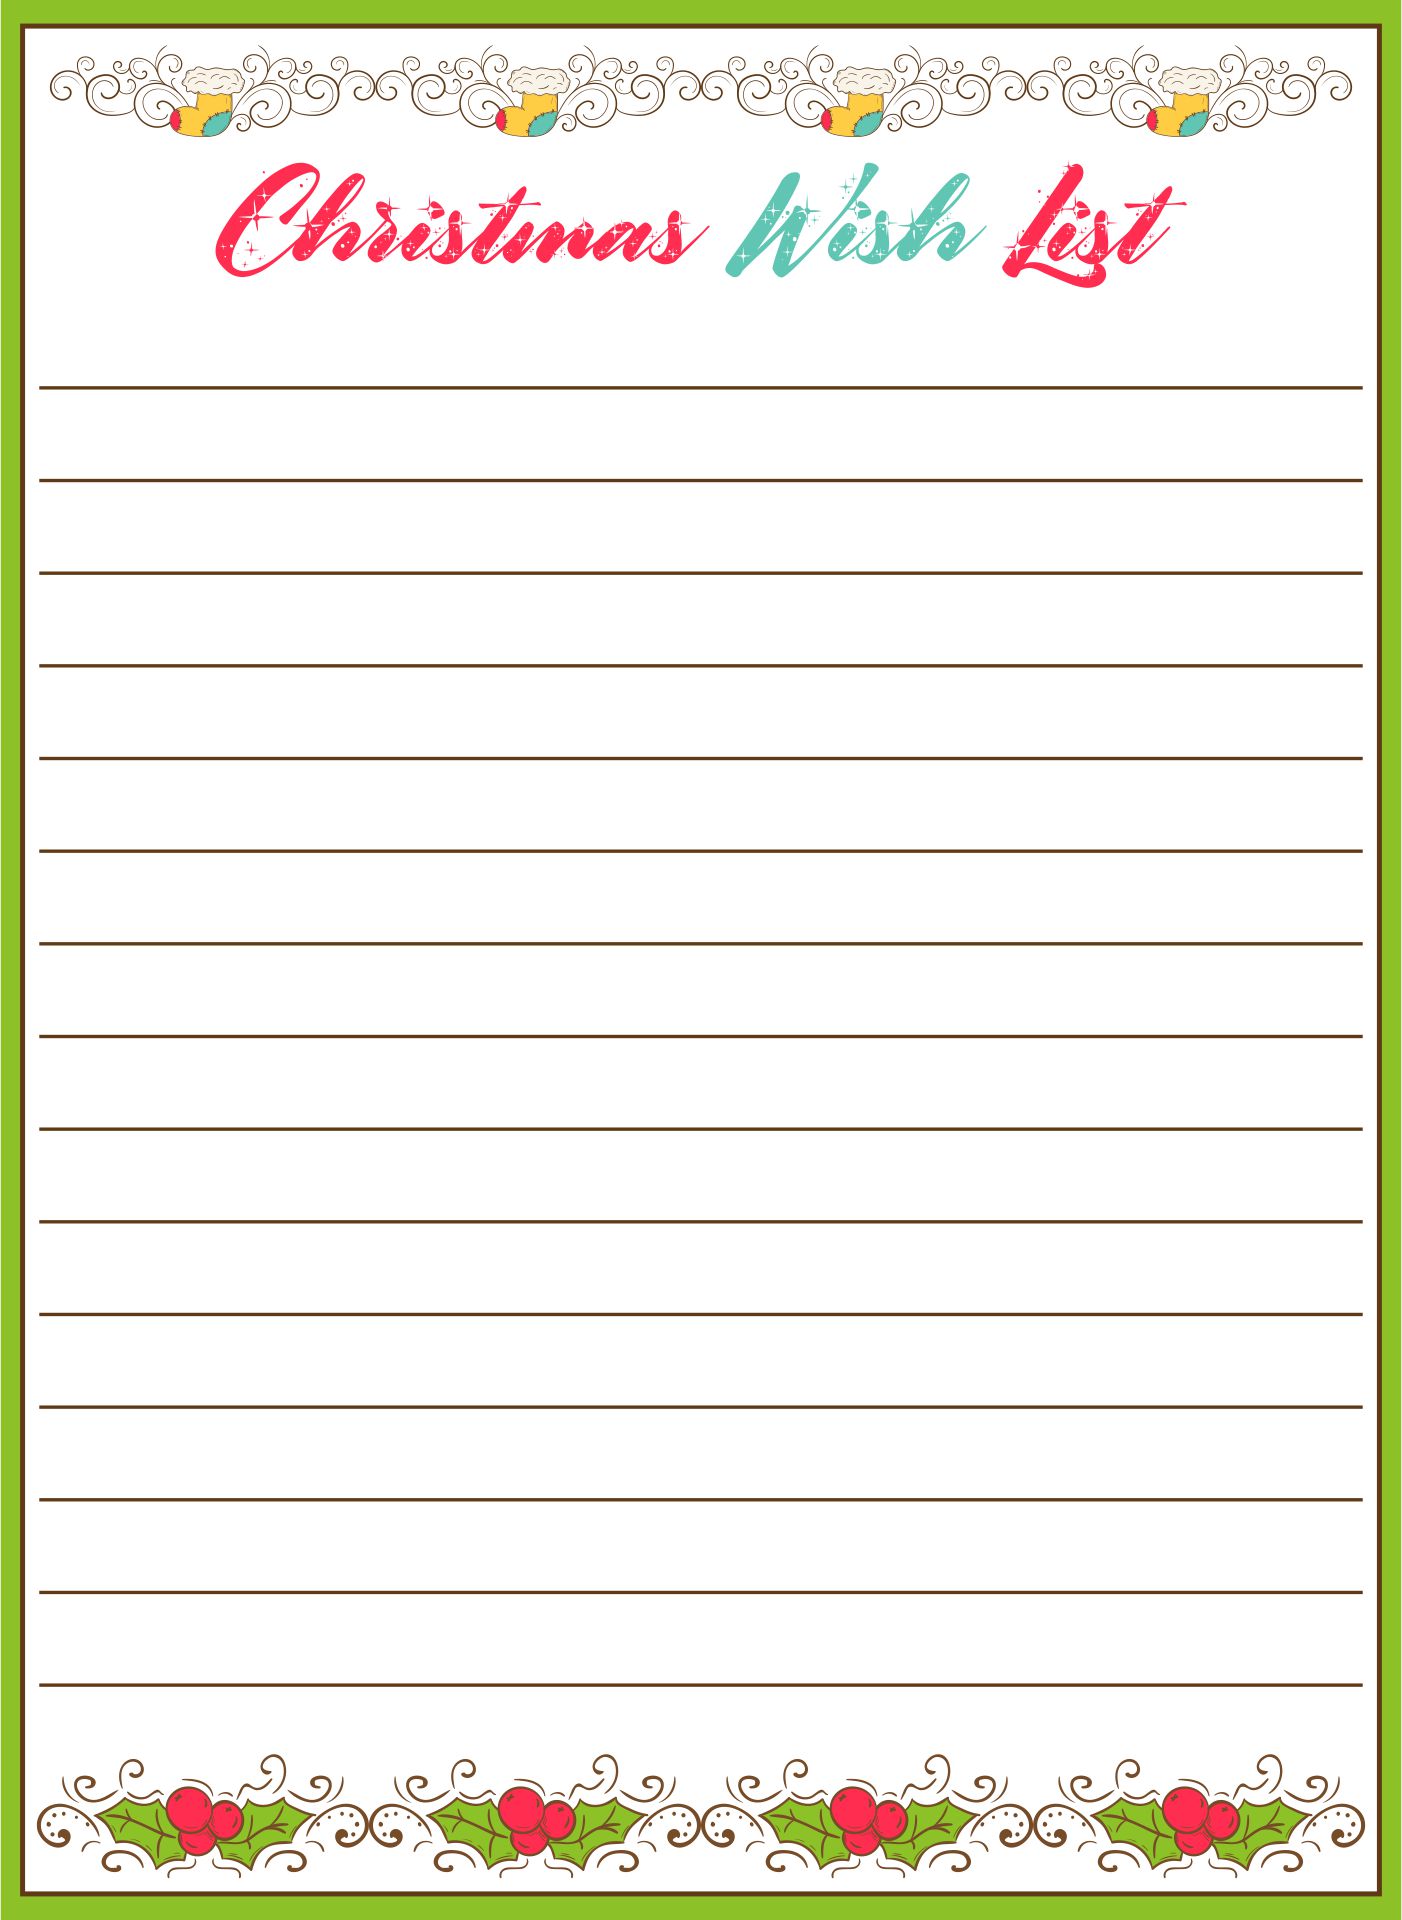 Printable Christmas Wish List Templates & Ideas